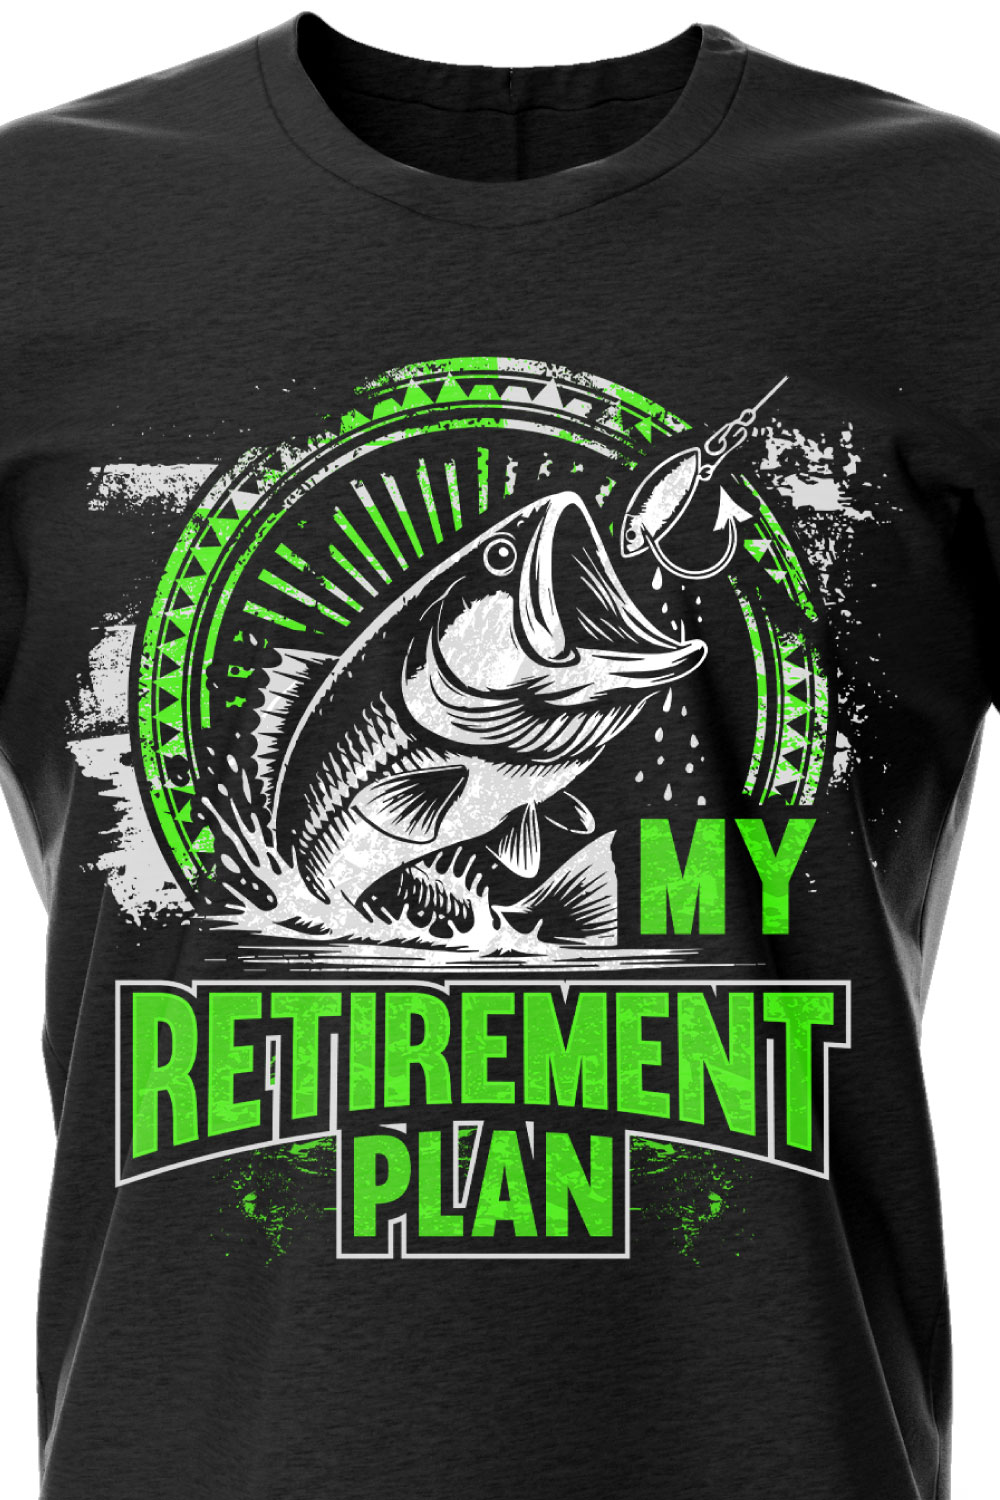 Hot selling fishing t shirt design bundle pinterest preview image.